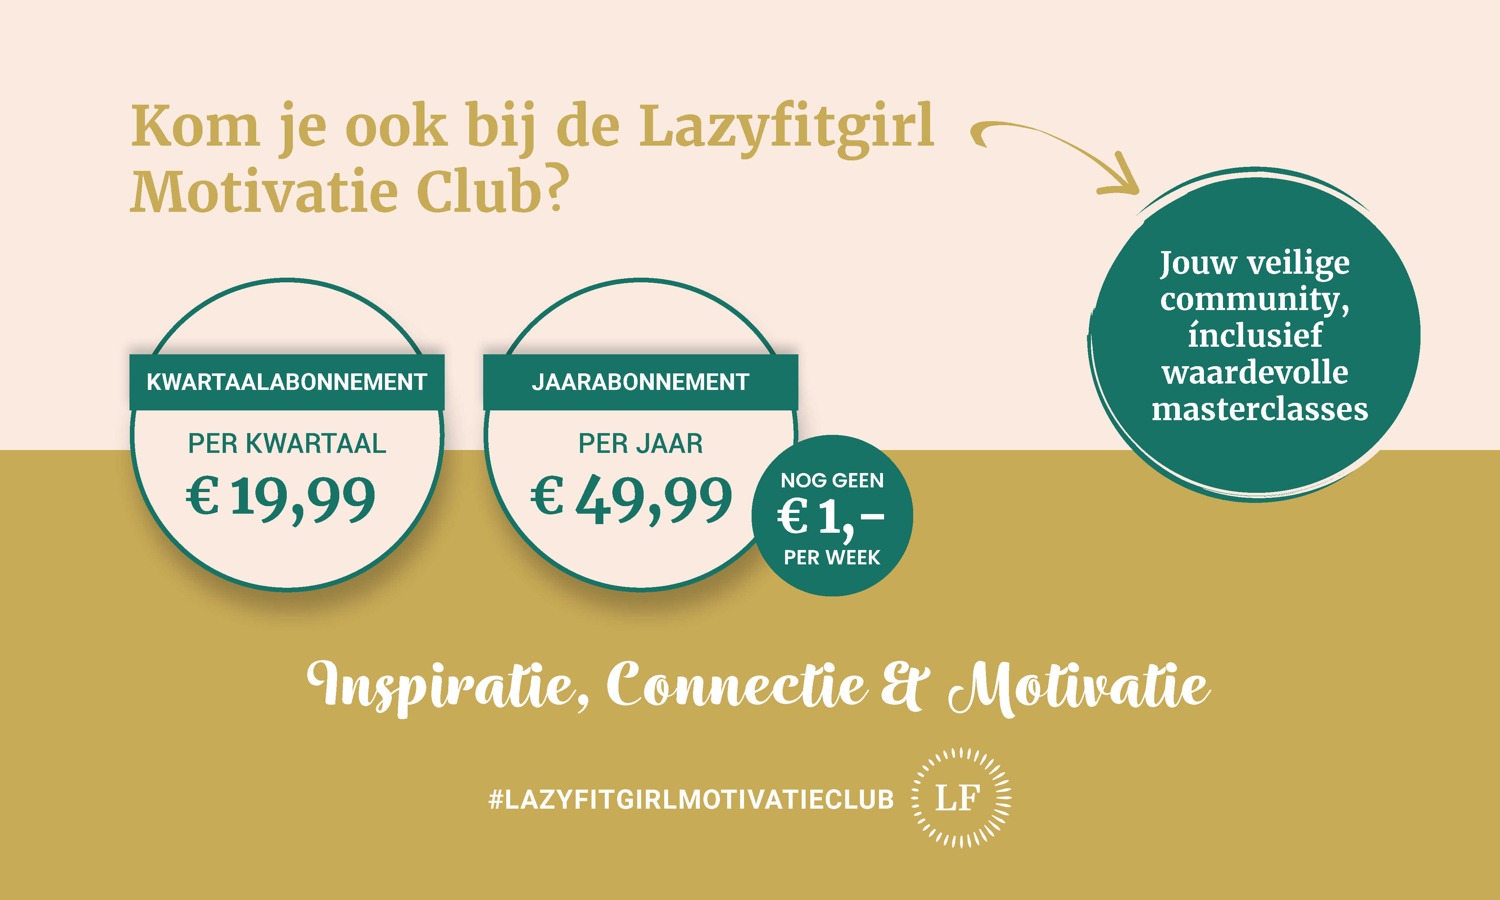 Lazyfitgirl Motivatie Club prijzen